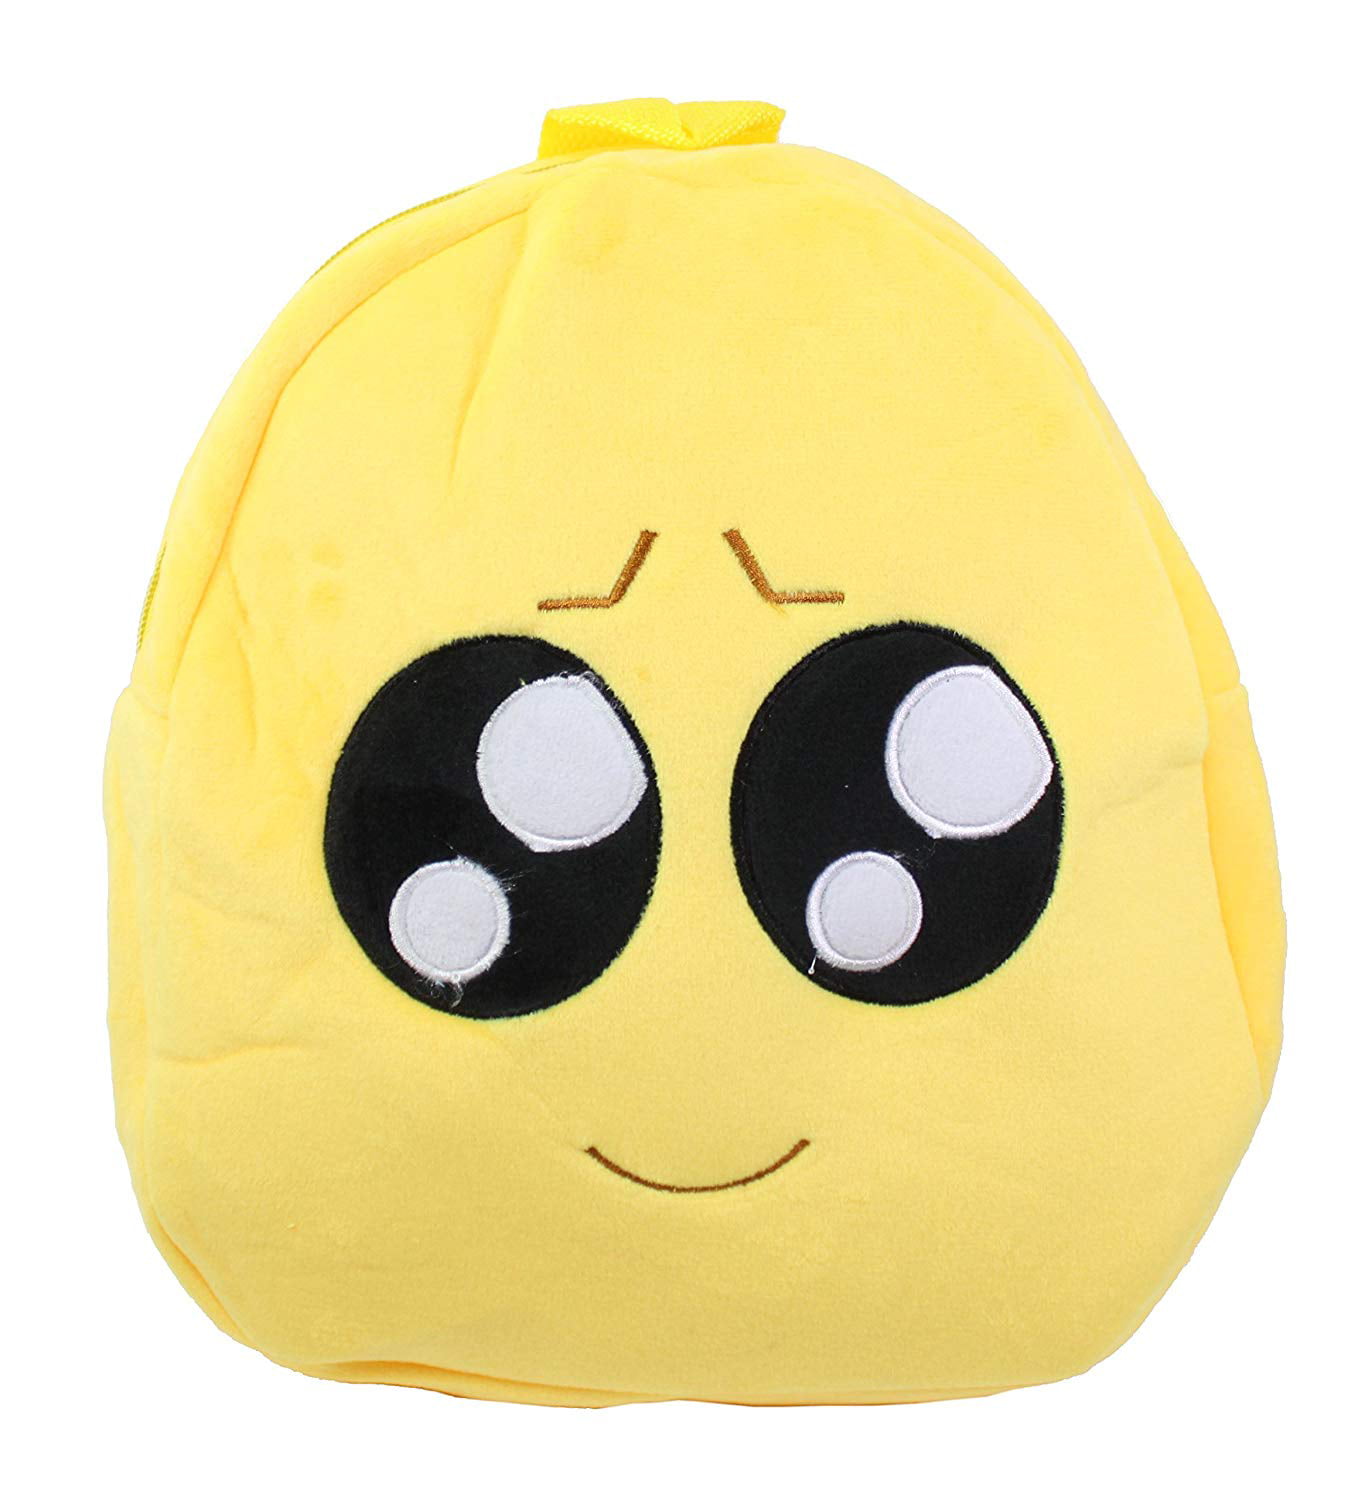 Grocery Bags For Men Samuel Smilies Smiley Emoticon Face Cartoon Smile Leather Hand Totes Bag Causal Handbags Zipped Shoulder Organizer For Lady Girls Womens Handbag Organizer Storage